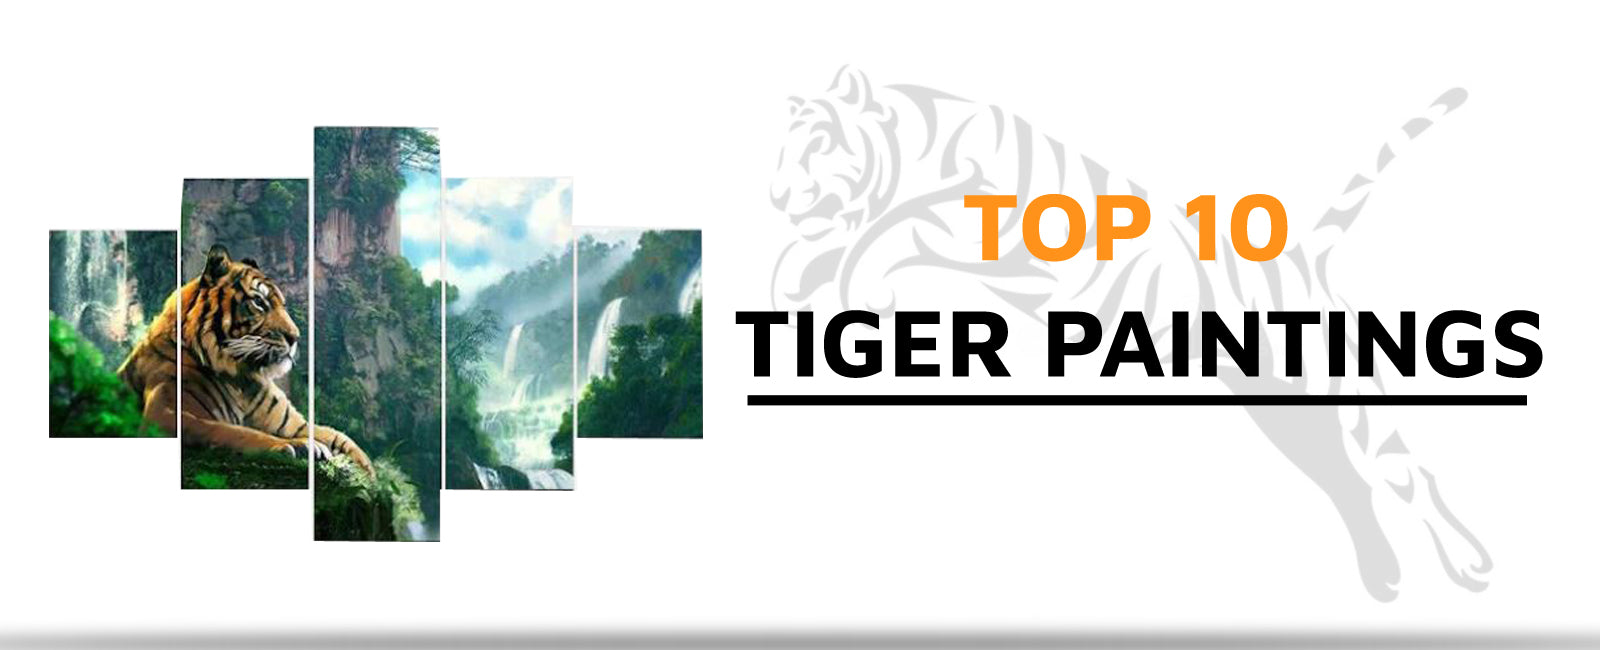 Top 10 Tiger Paintings